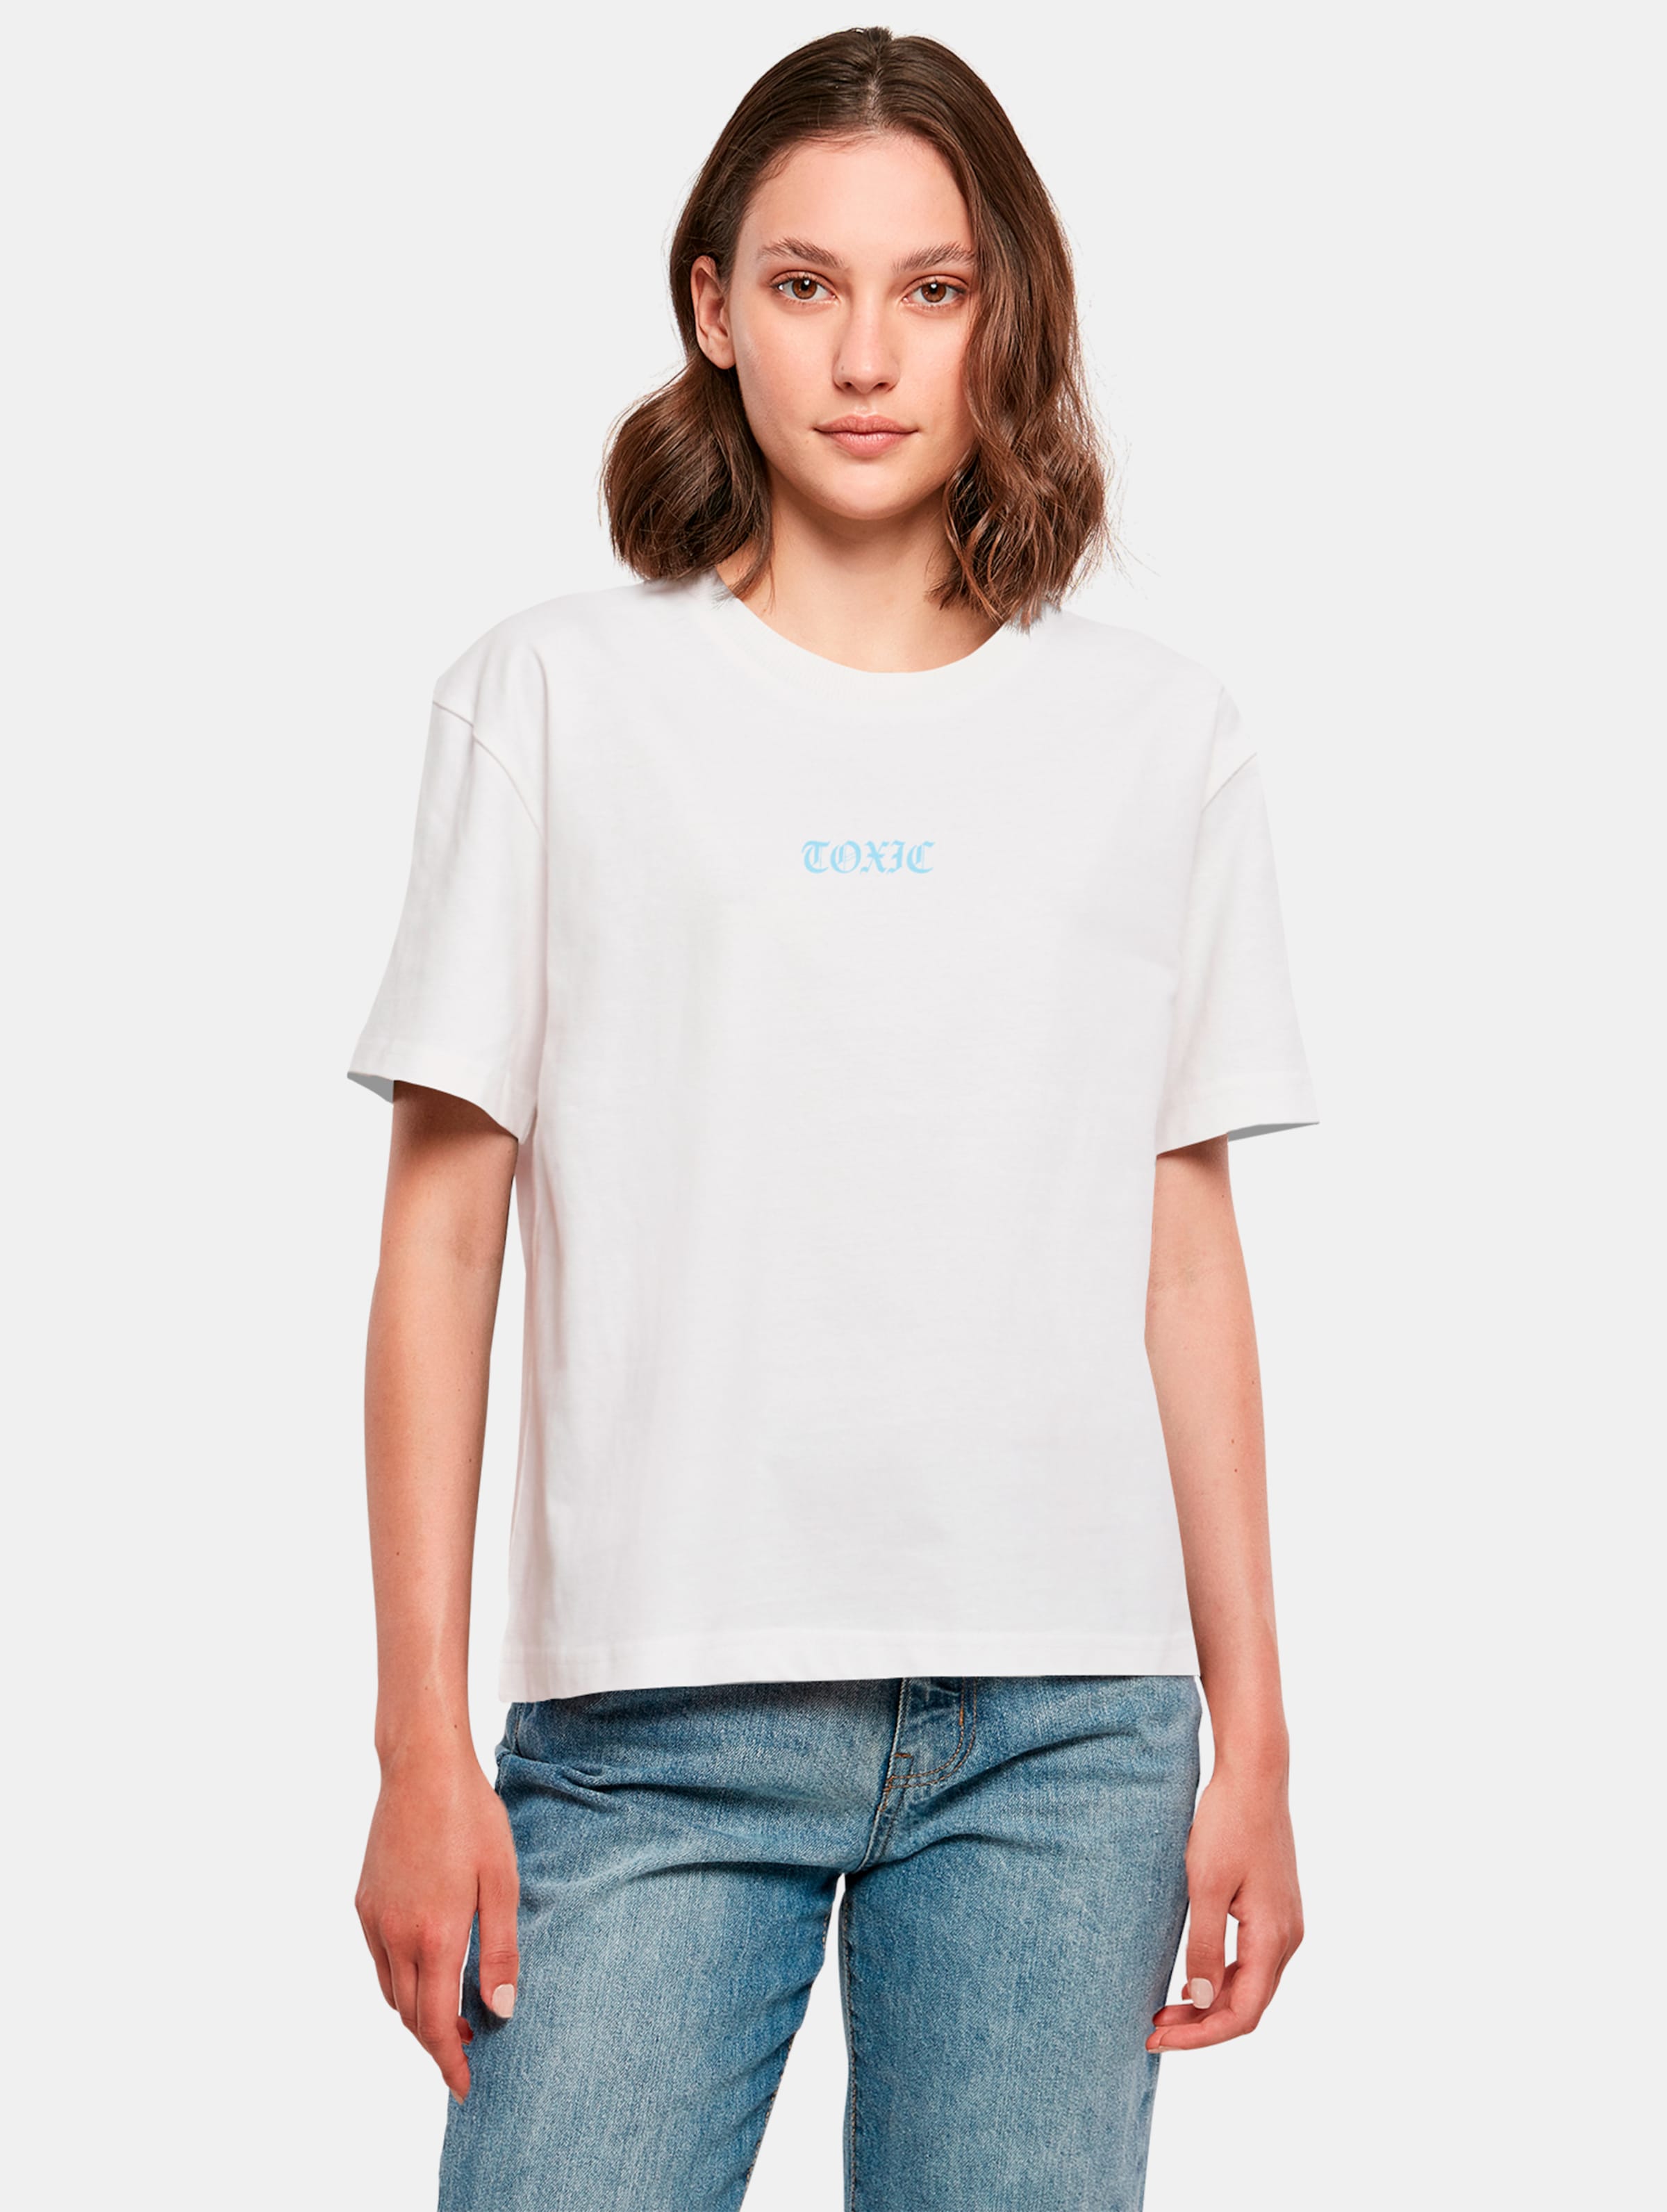 Miss Tee Toxic Snake T-Shirts Frauen,Unisex op kleur wit, Maat M